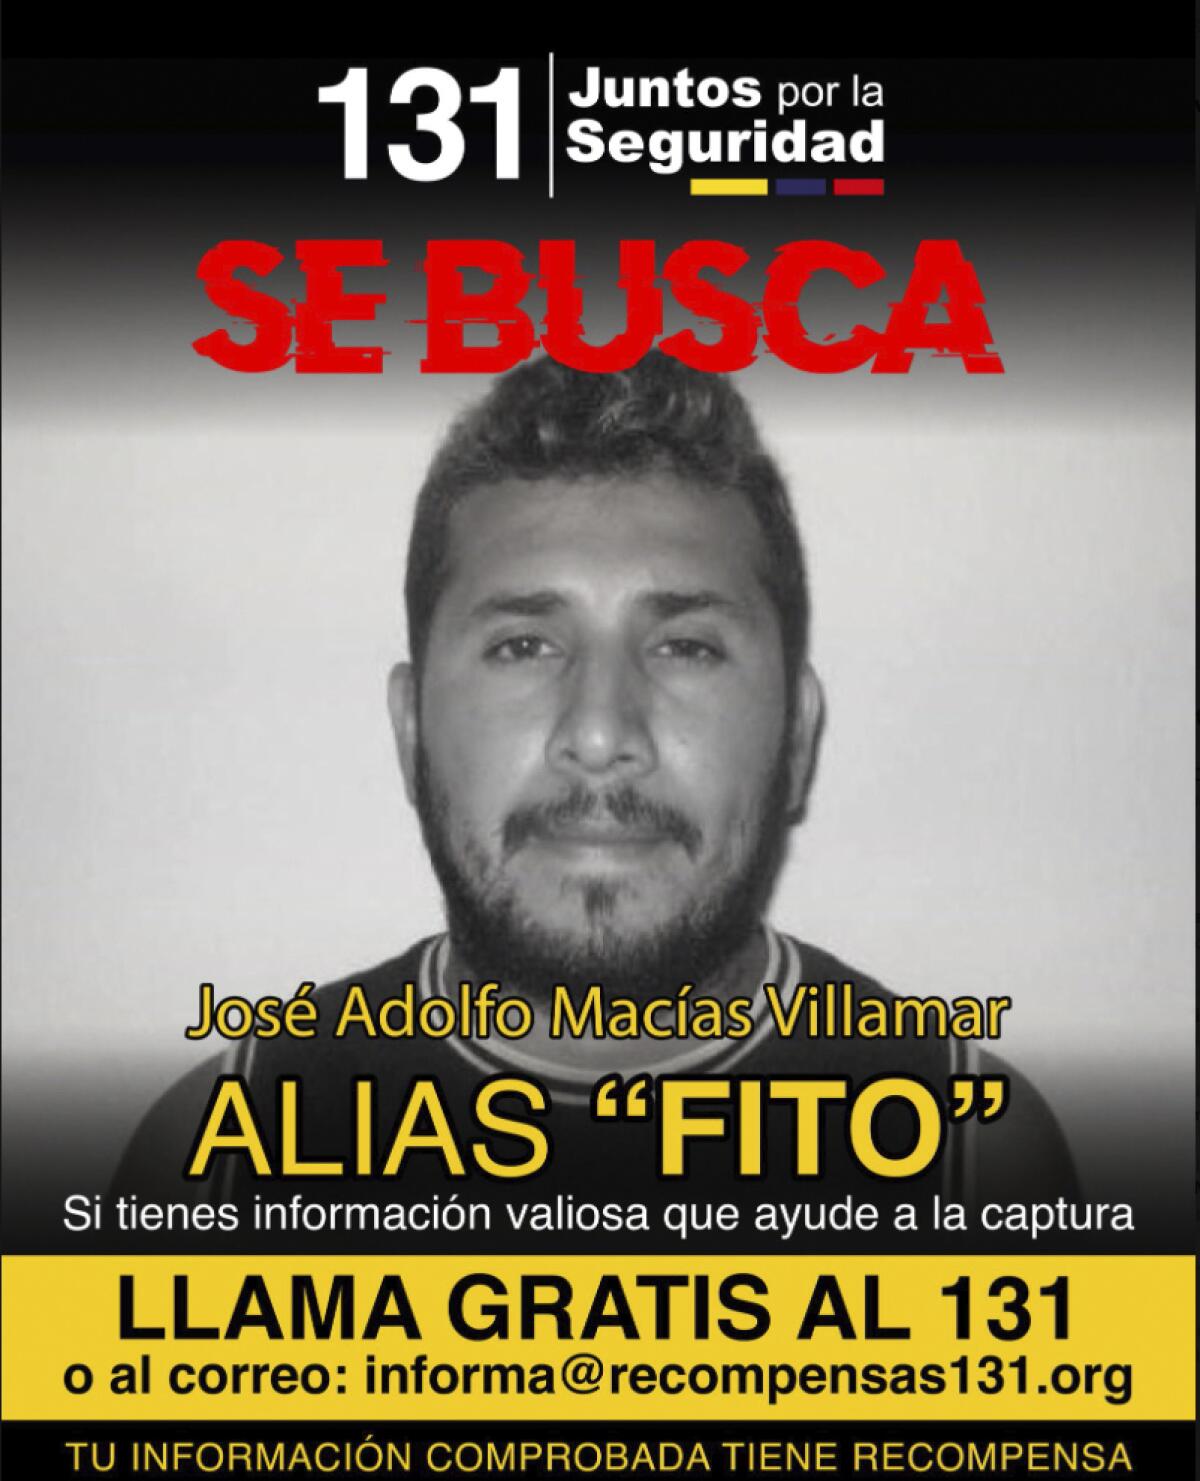 Wanted poster for Ecuadorean gang leader